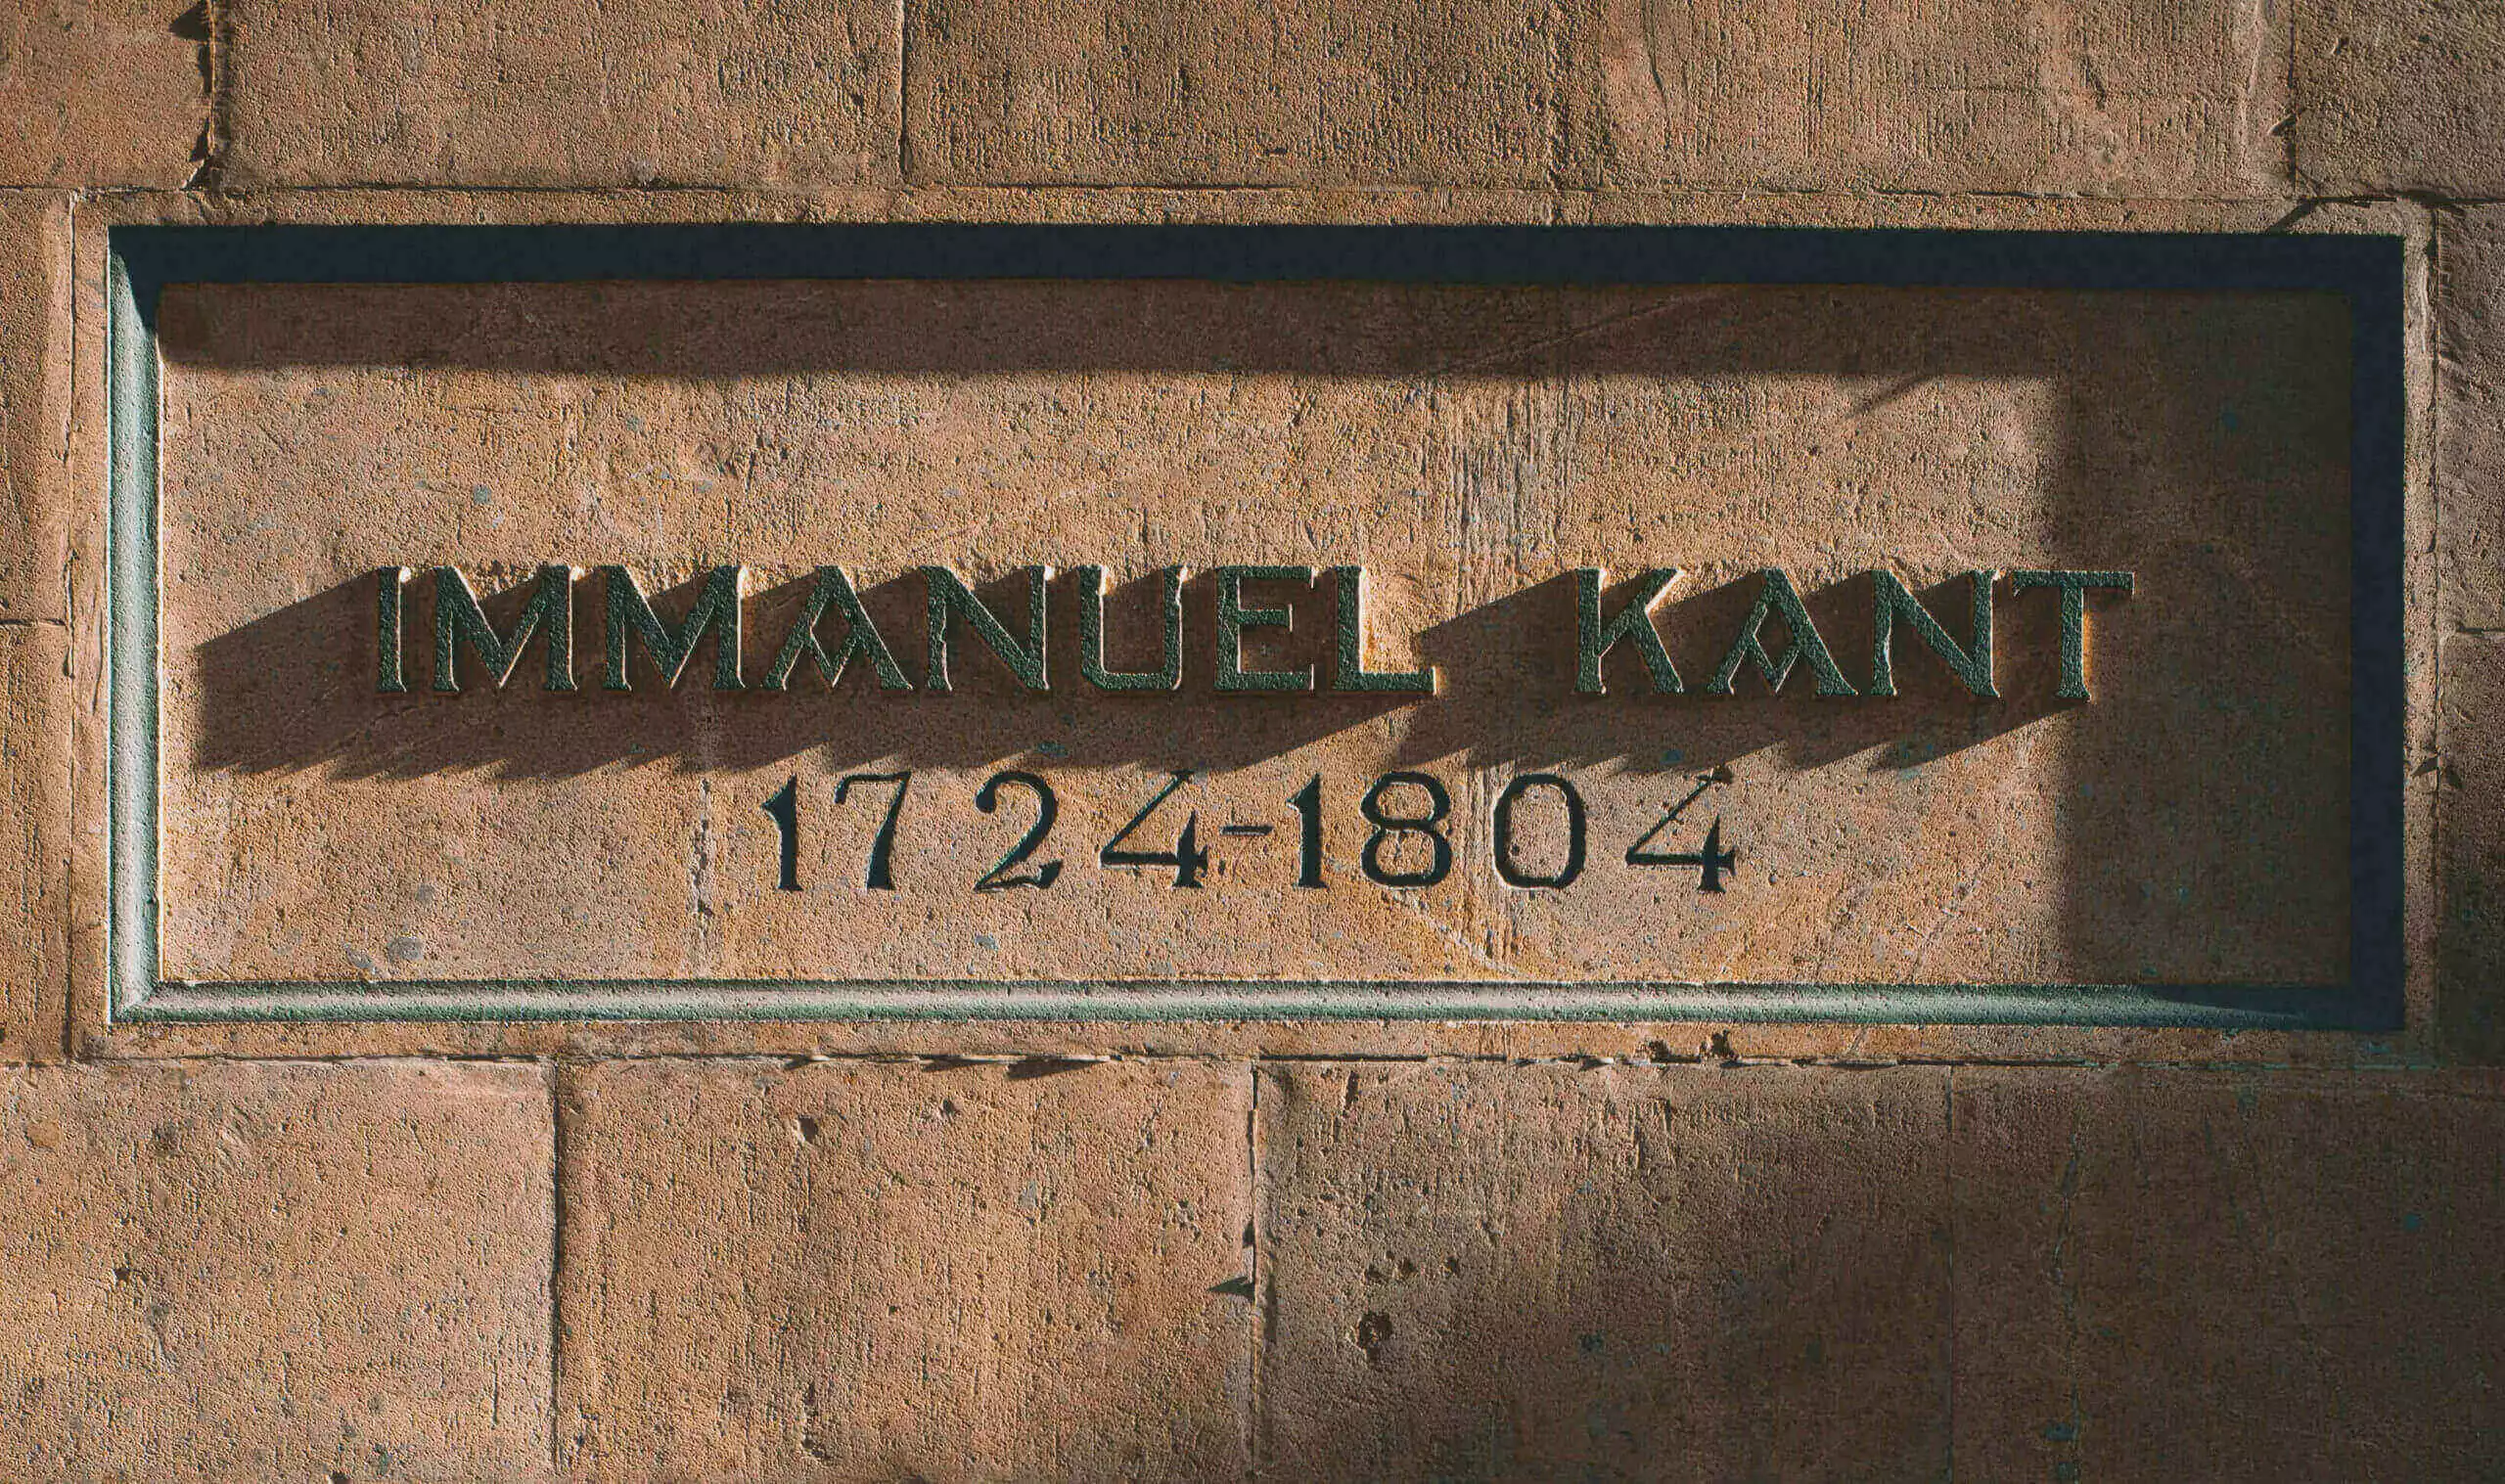 Immanuel Kant Stein 1724-1804